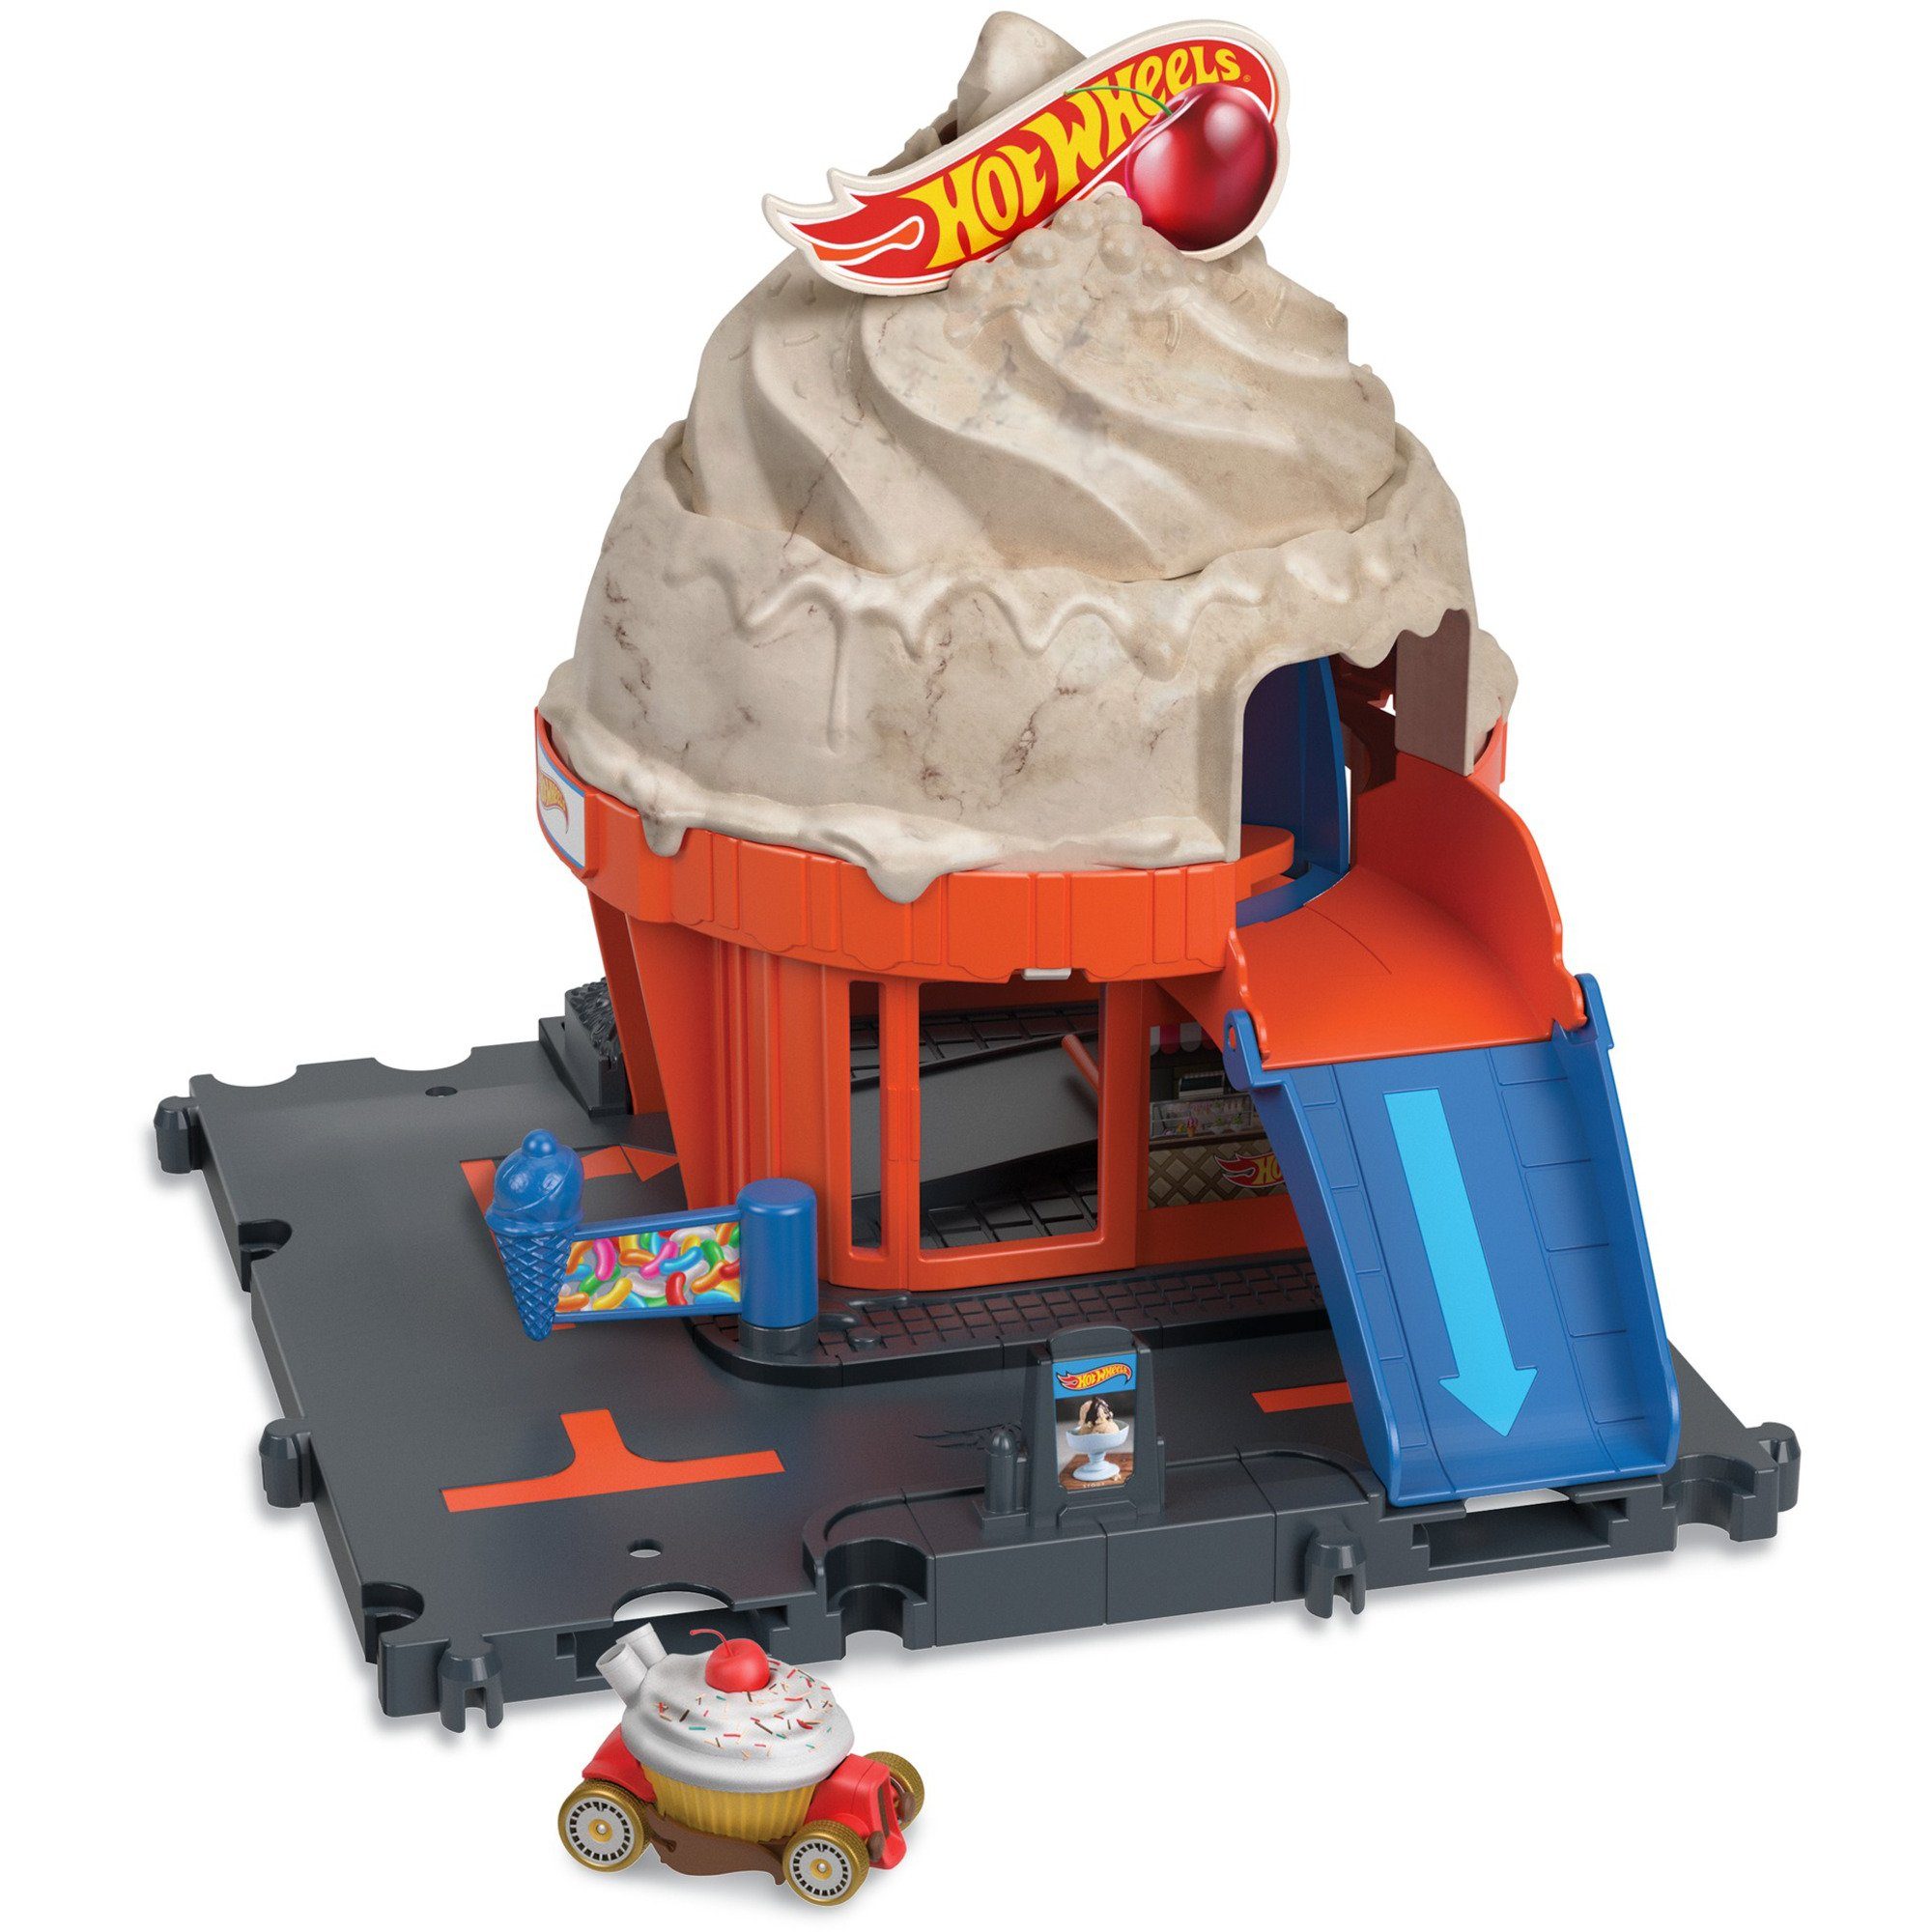 Spielzeug-Auto City Eiscrem-Strudel Hot Wheels